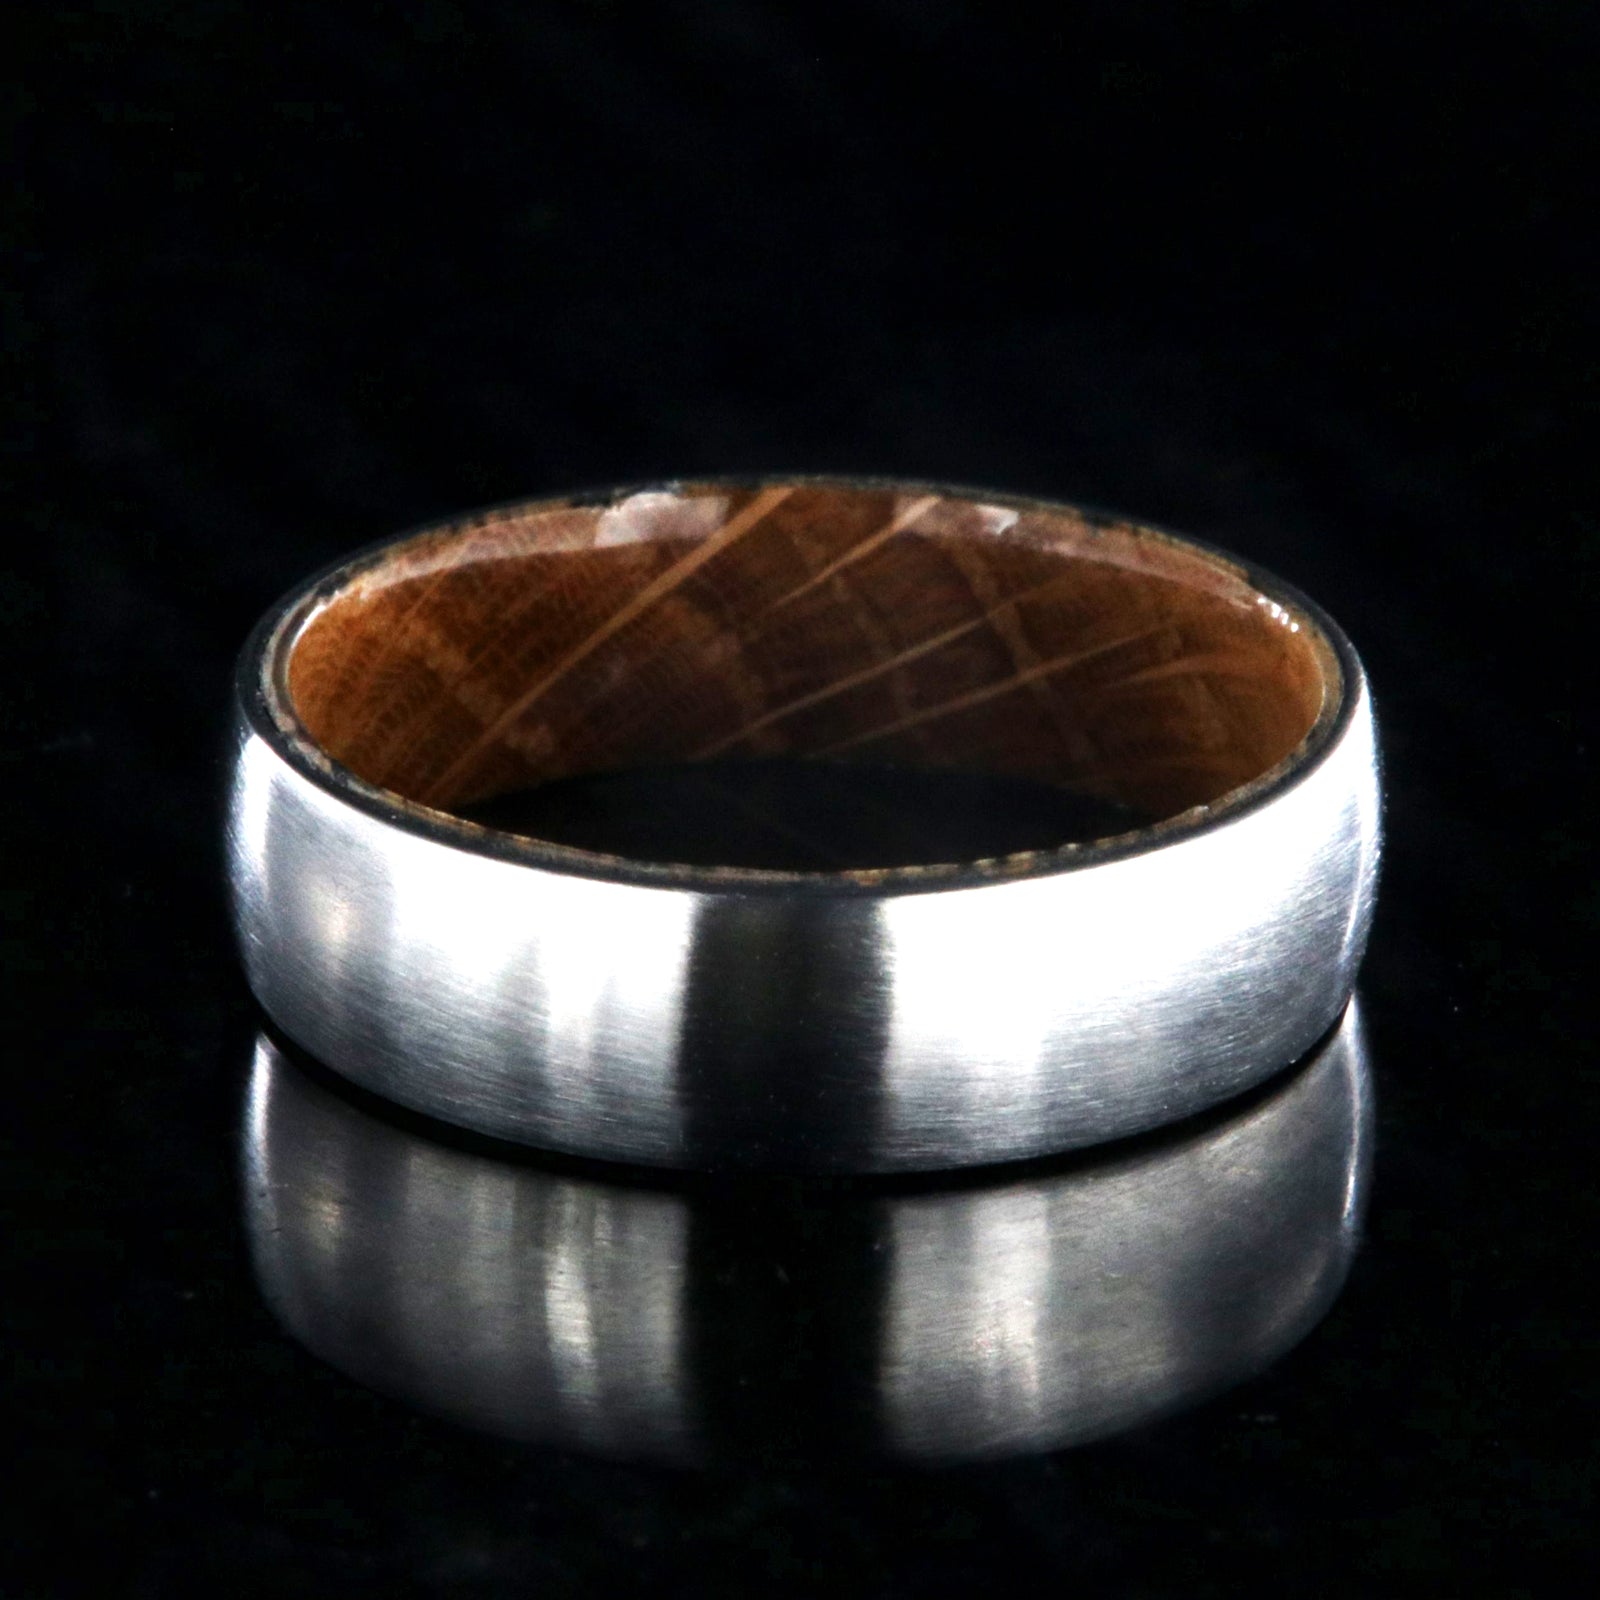 Wooden Rings, Cobalt Ring